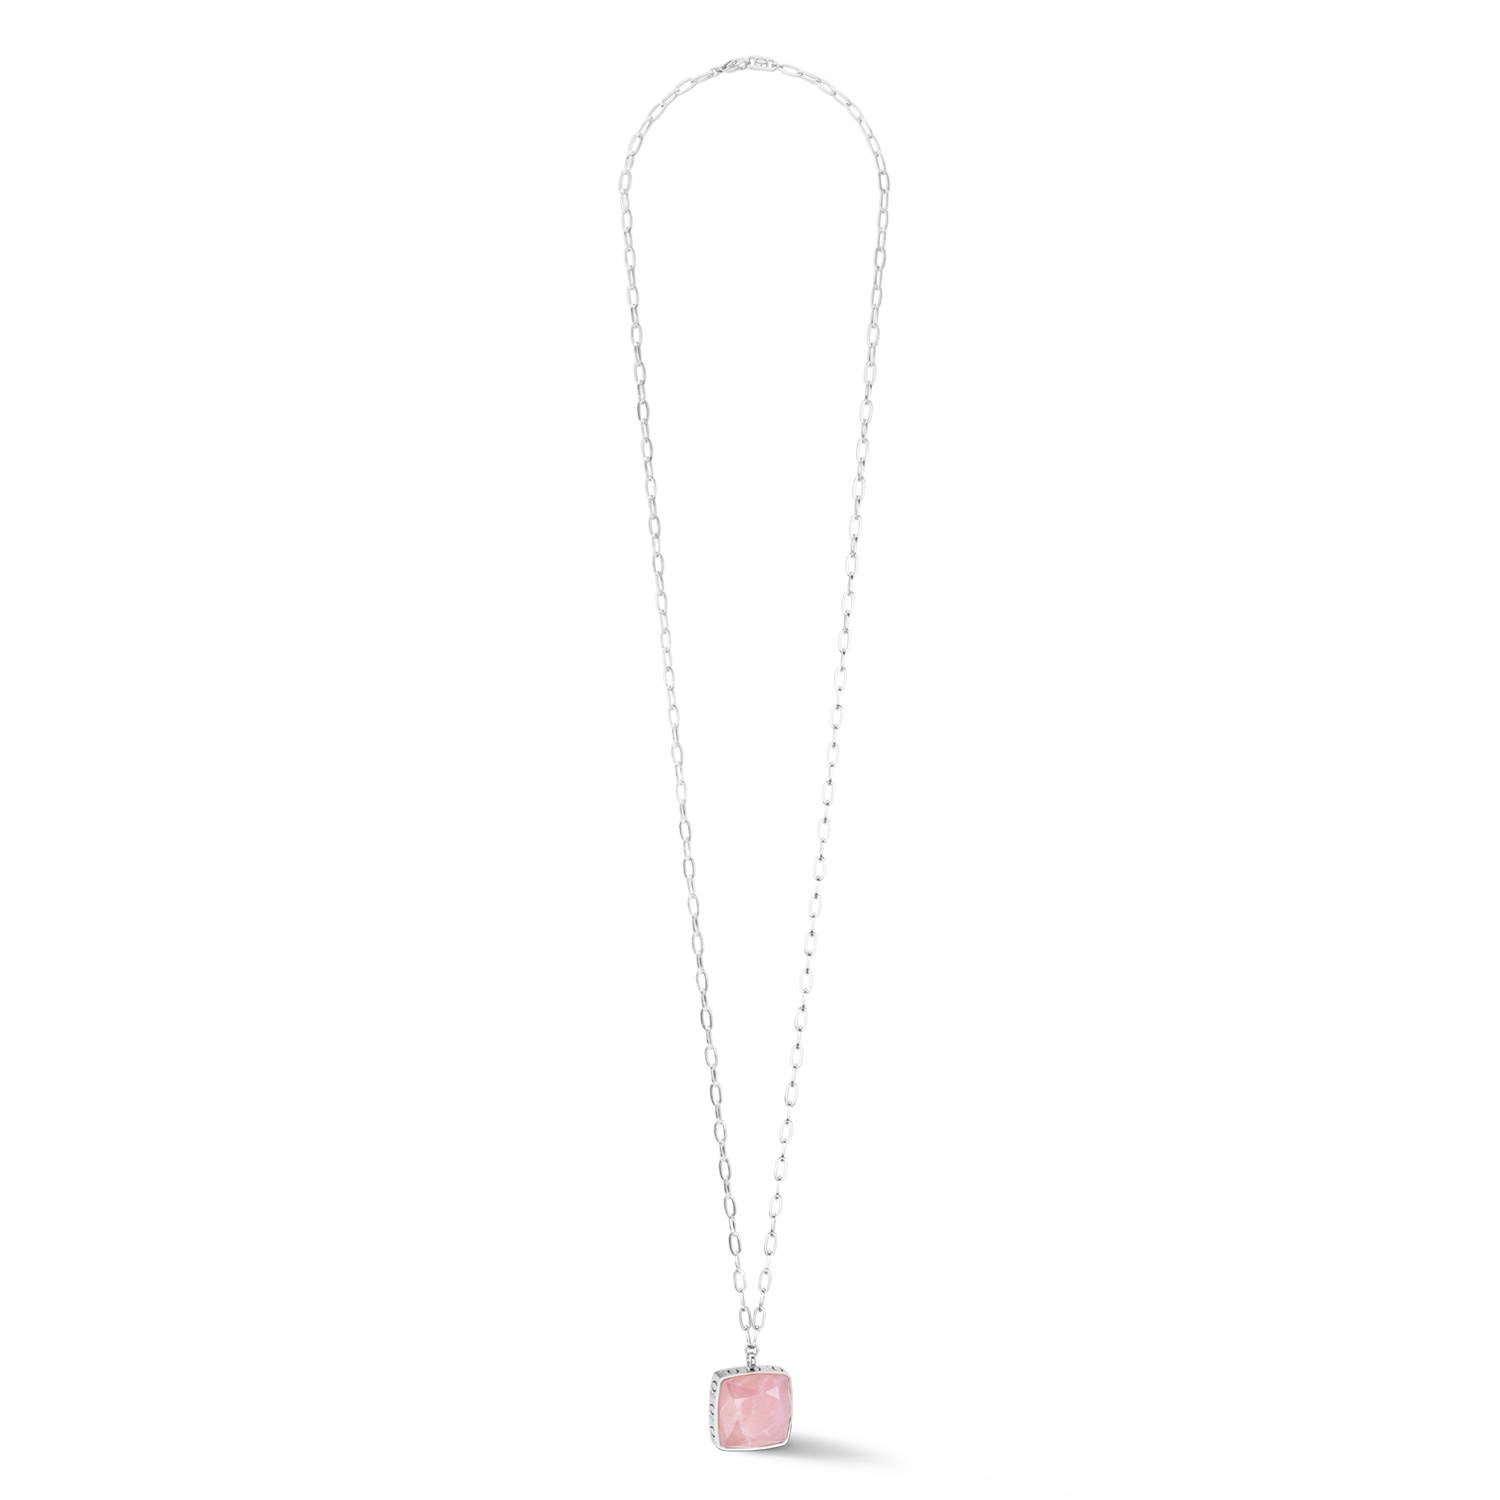 Necklace OE Amulet Square Rose Quartz silver-pink